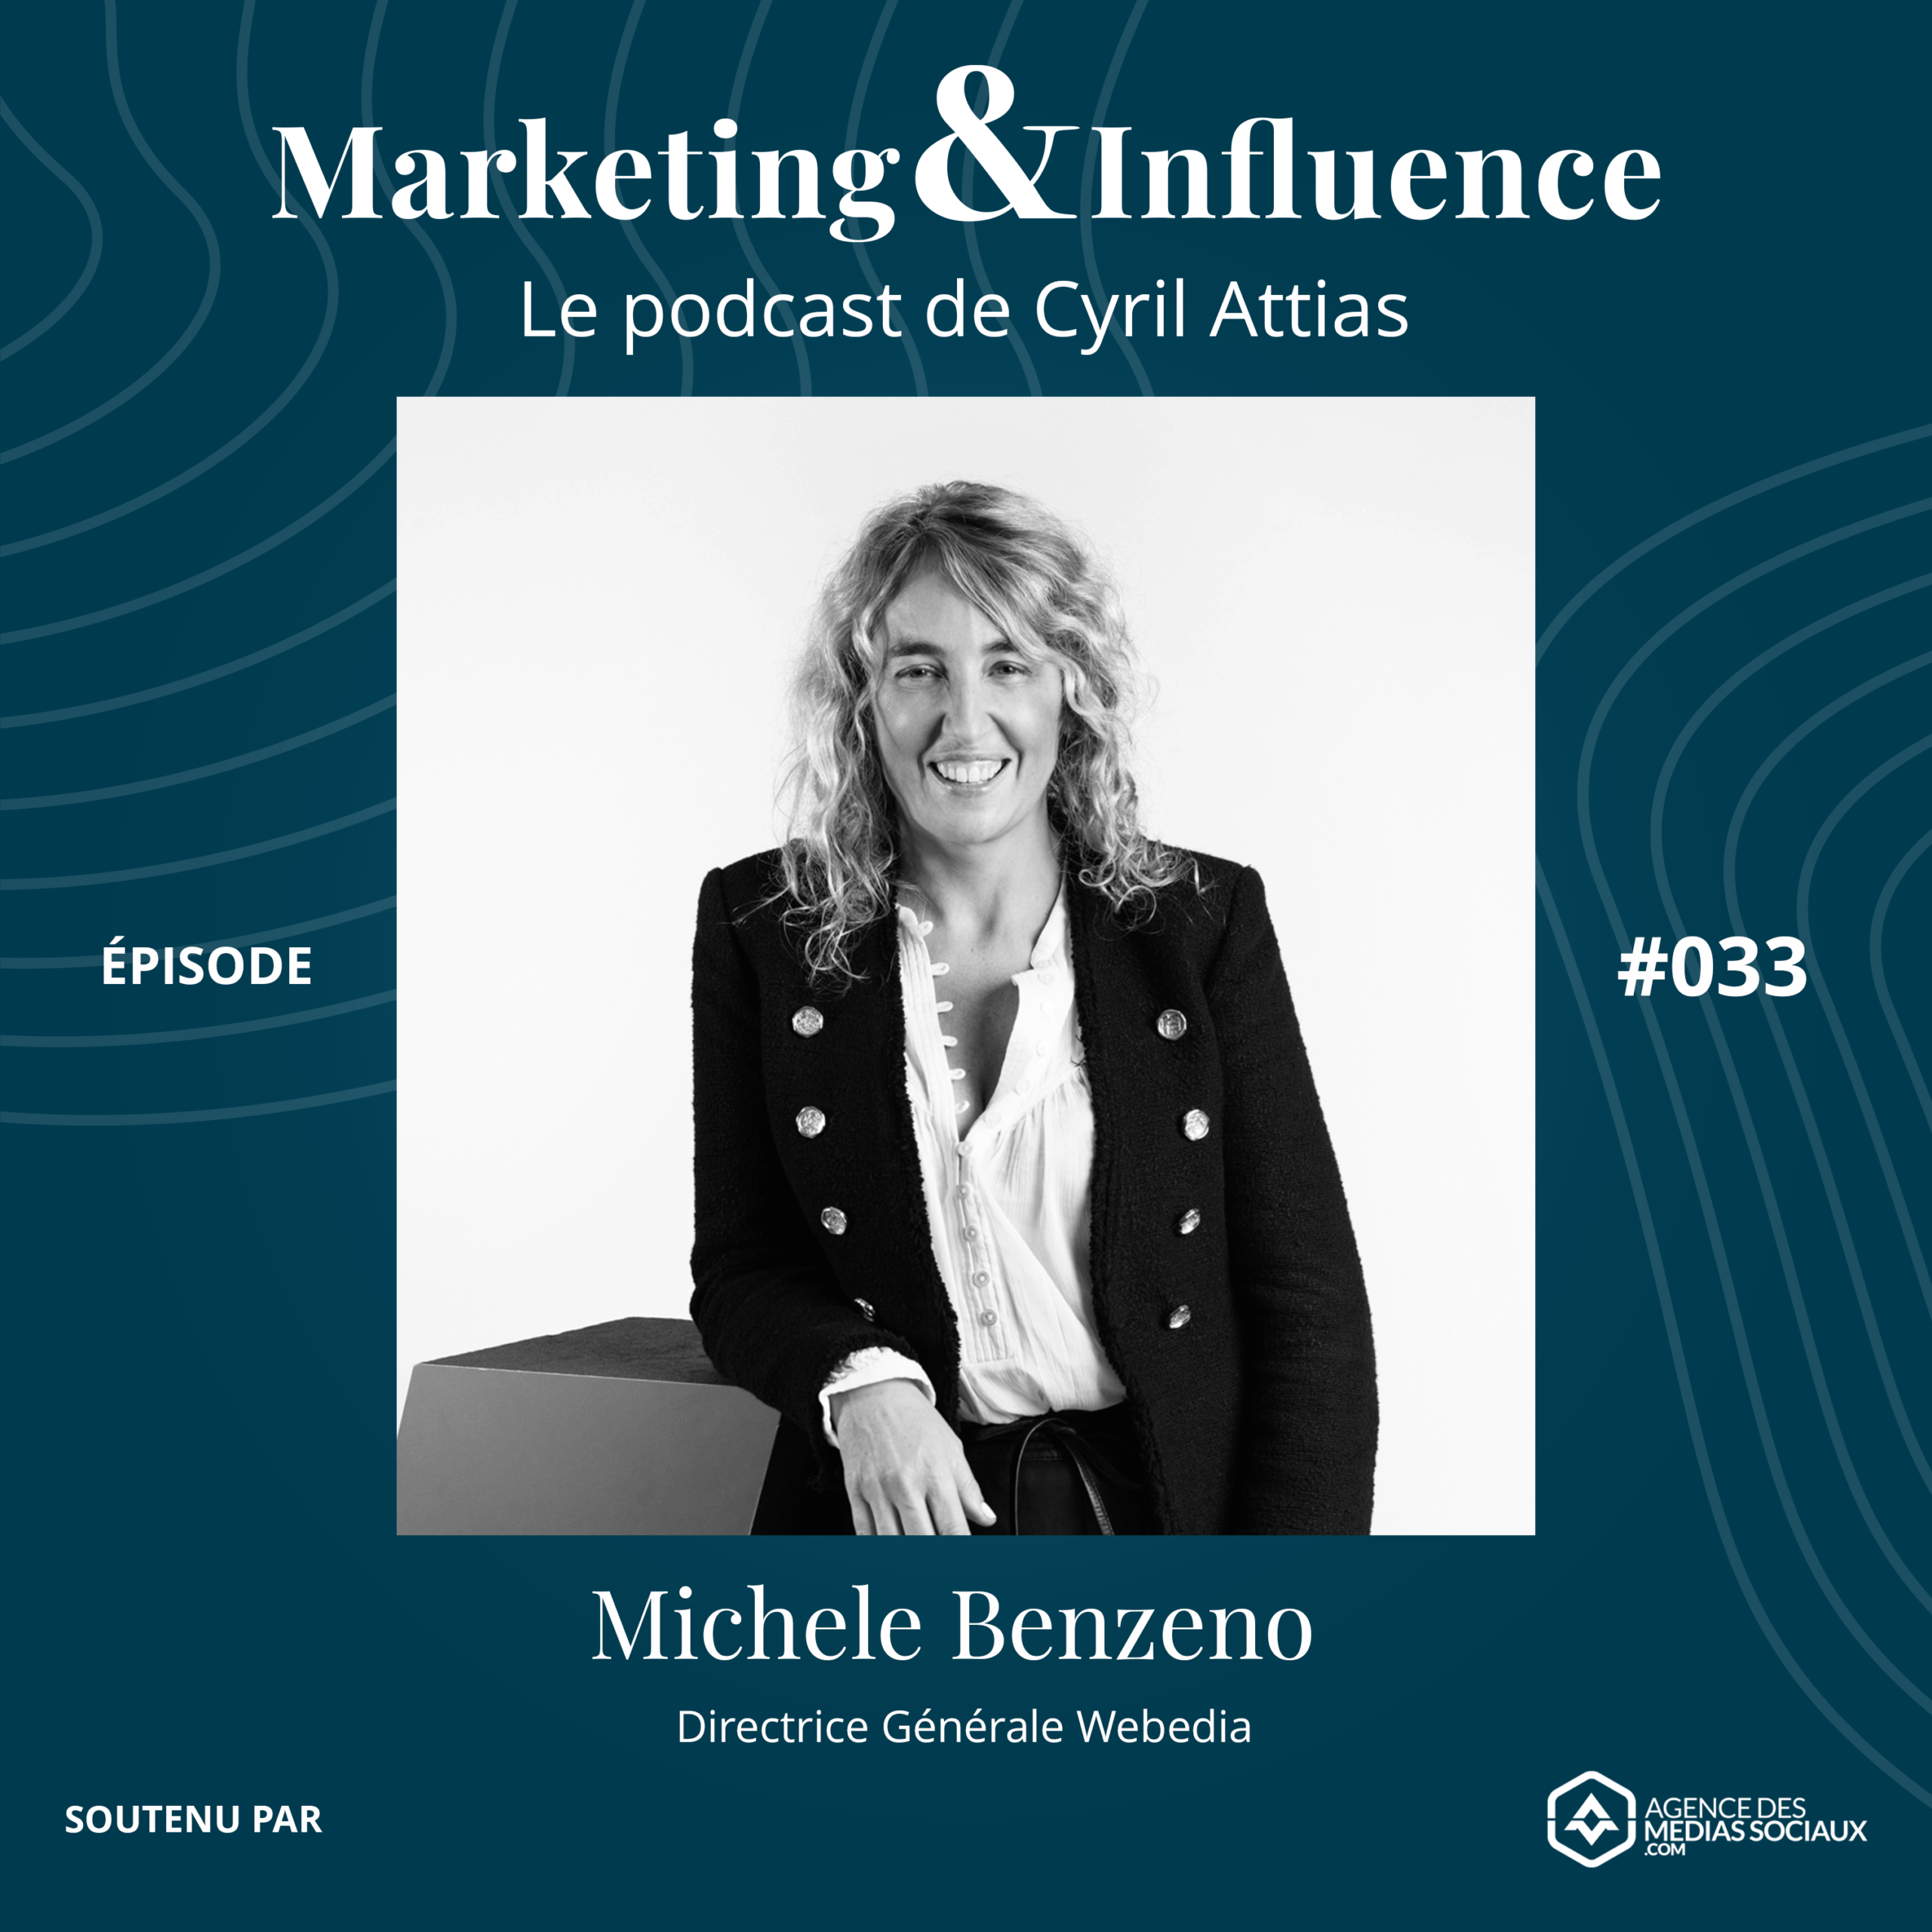 michele-benzeno-webedia-creator-shows-Podcast-Cyril-Attias-Marketing-Influence1